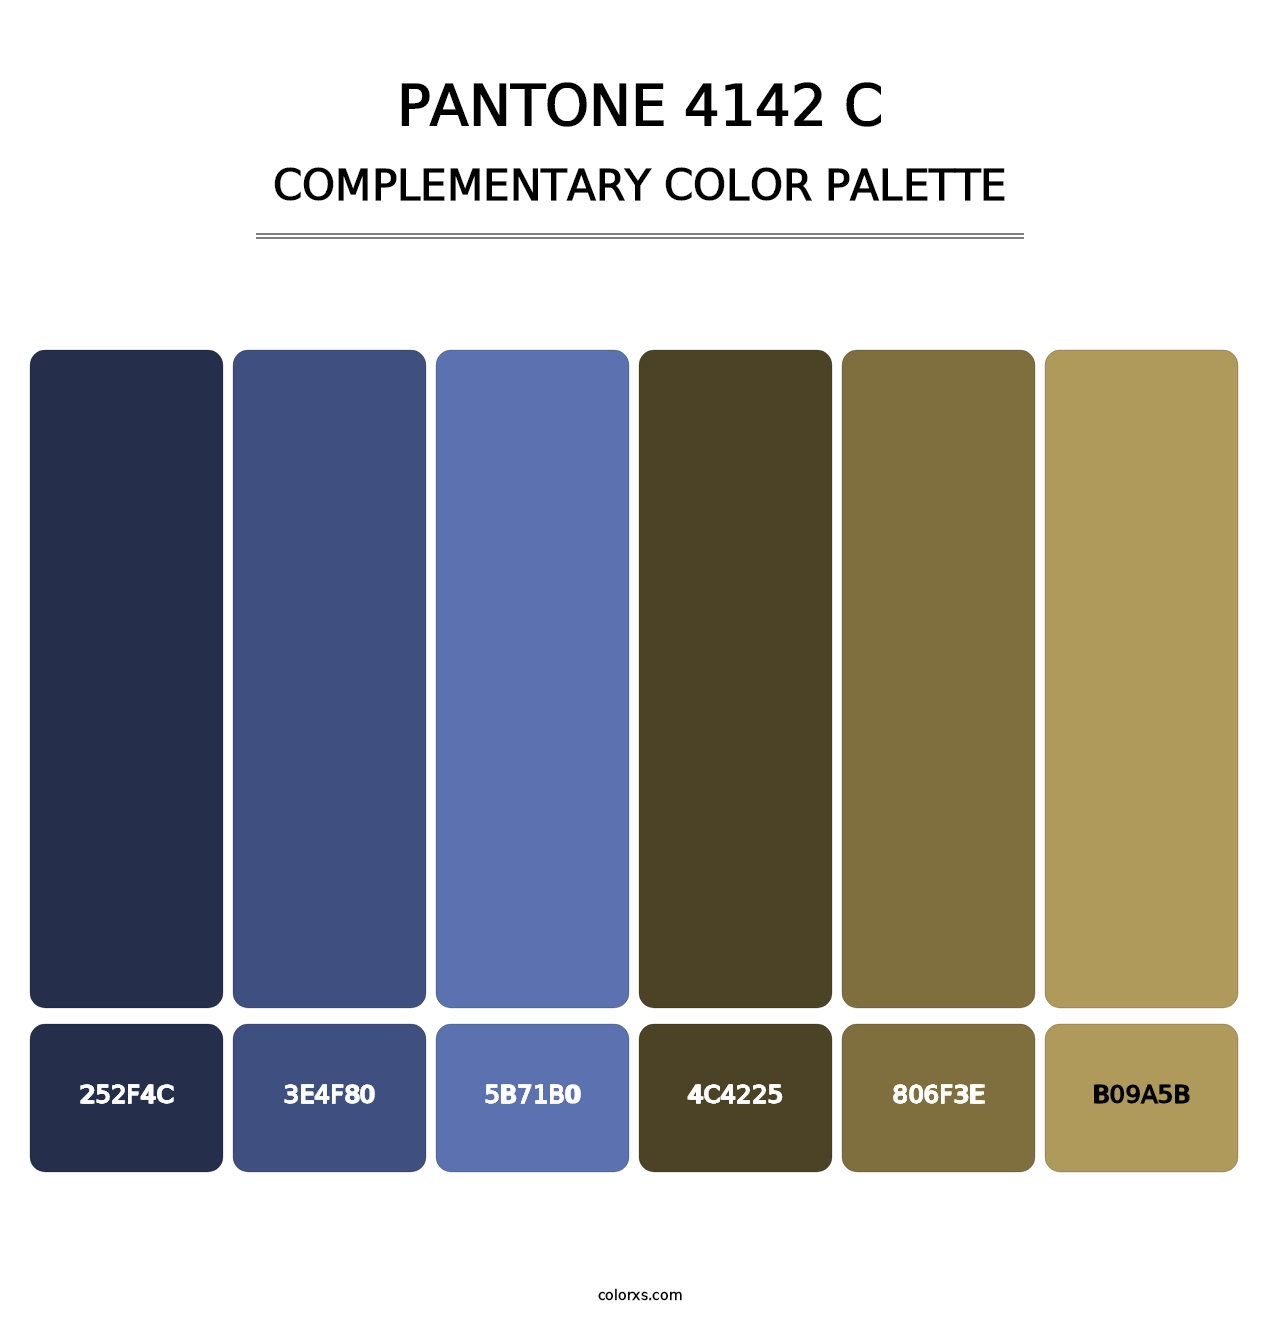 PANTONE 4142 C - Complementary Color Palette